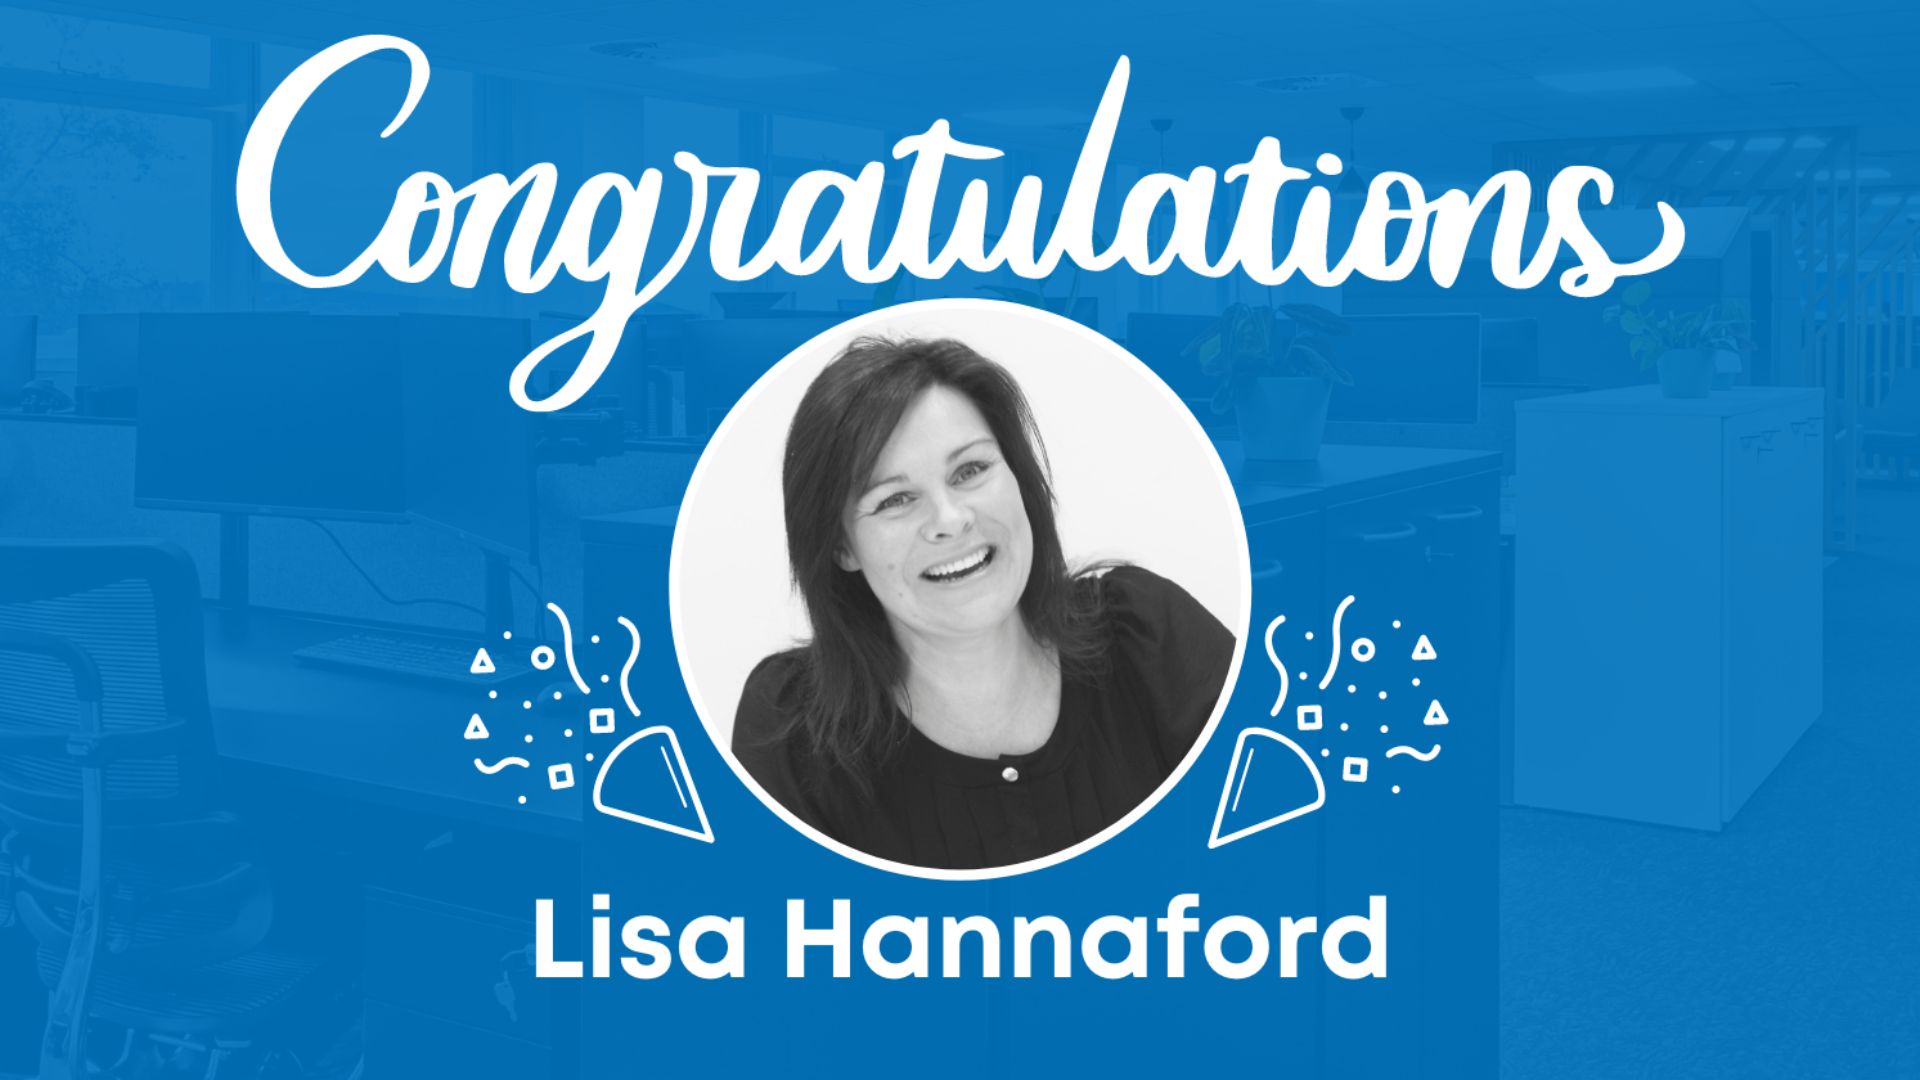 Congratulations to Lisa Hannaford